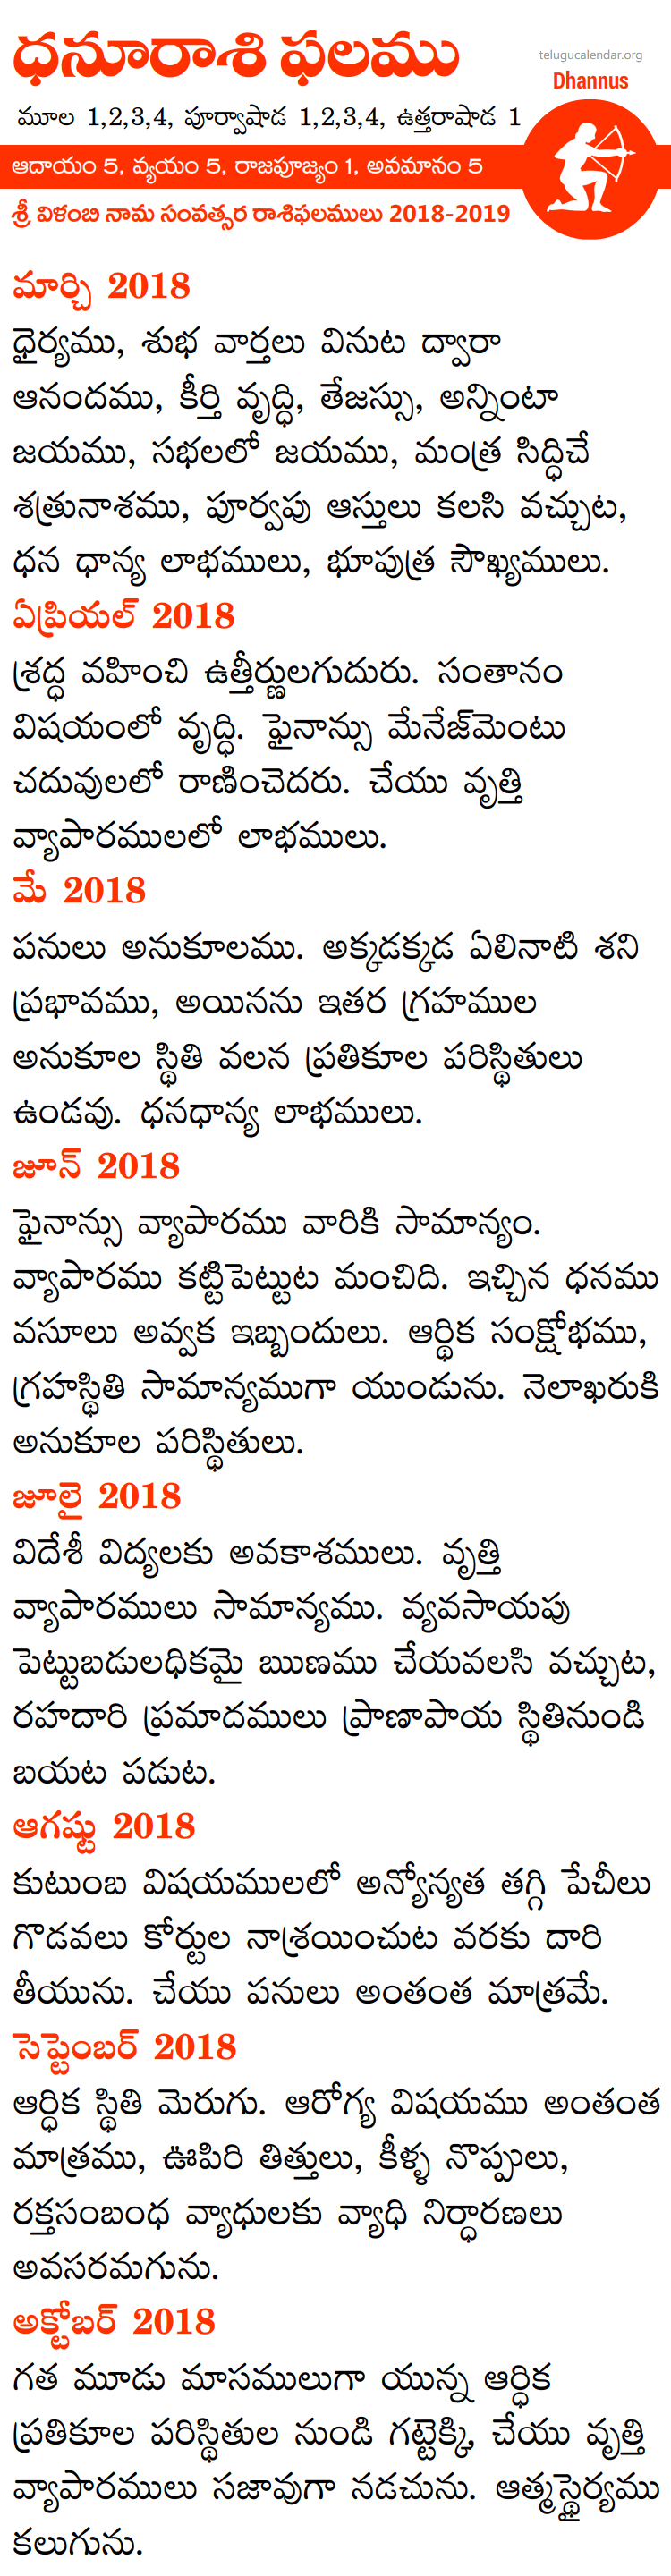 Dhannus Rasi Phalalu 2018-2019 Telugu